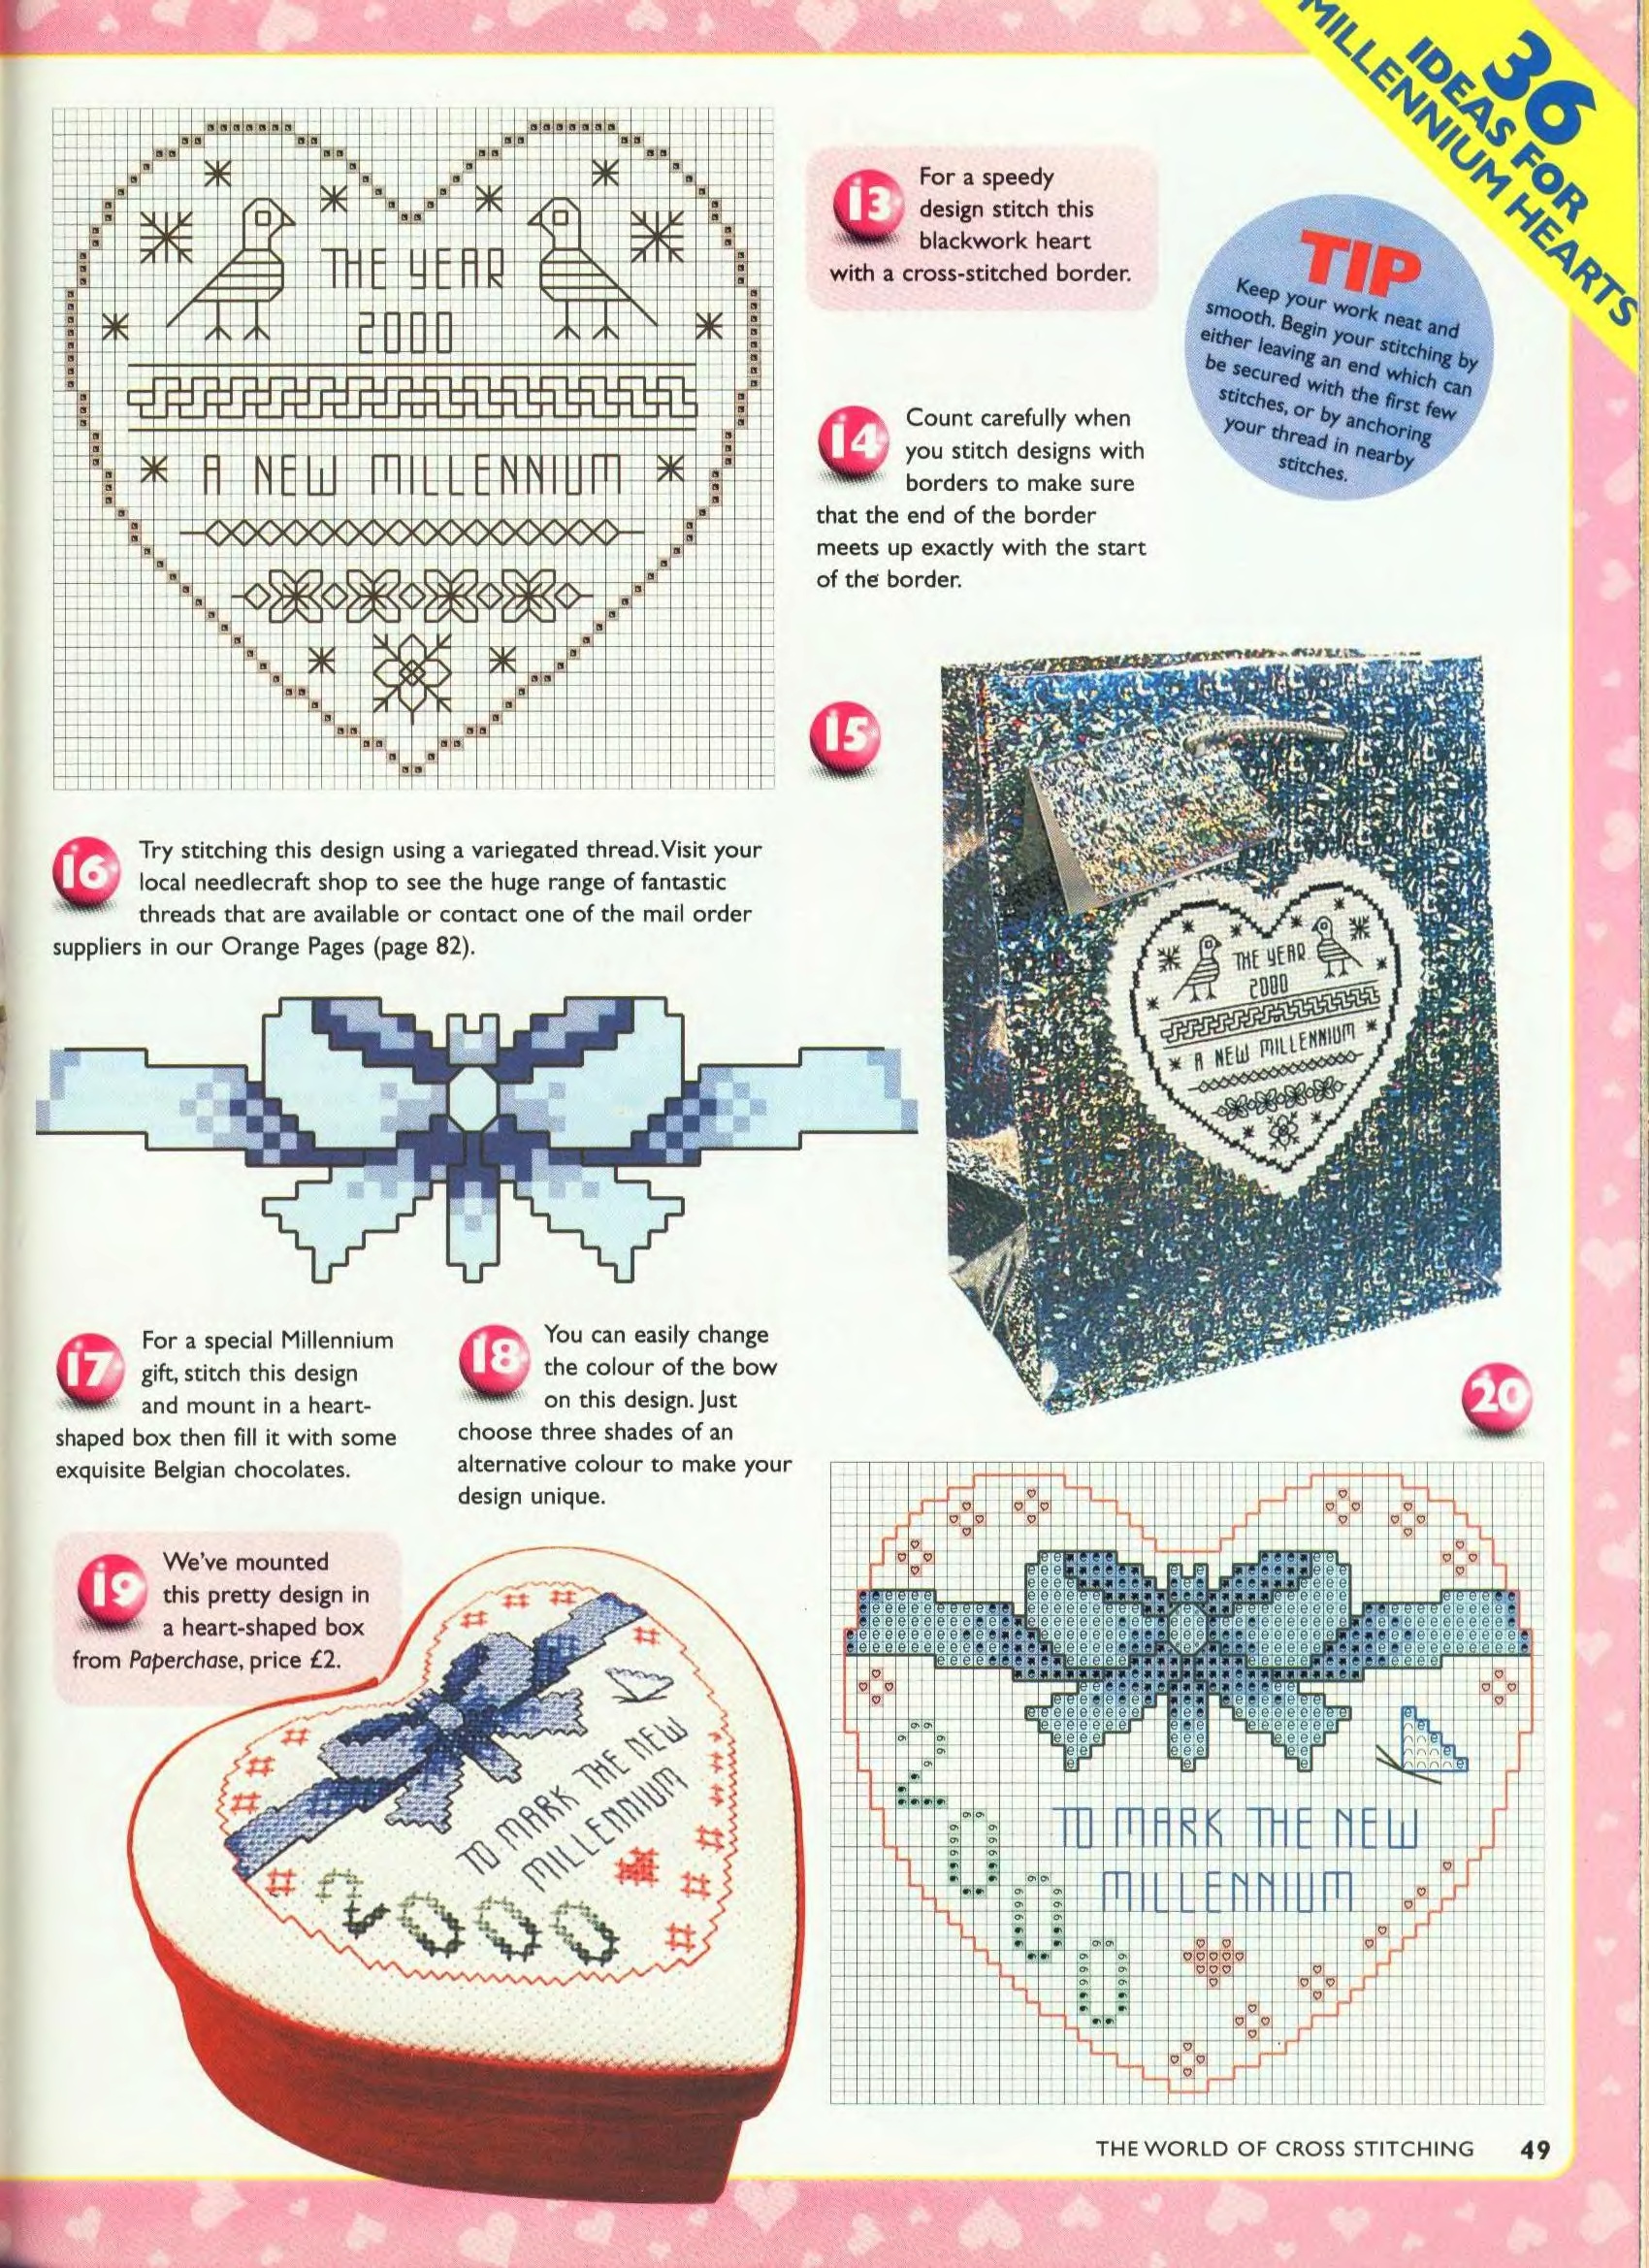 Millenium hearts ideas cross stitch pattern (4)